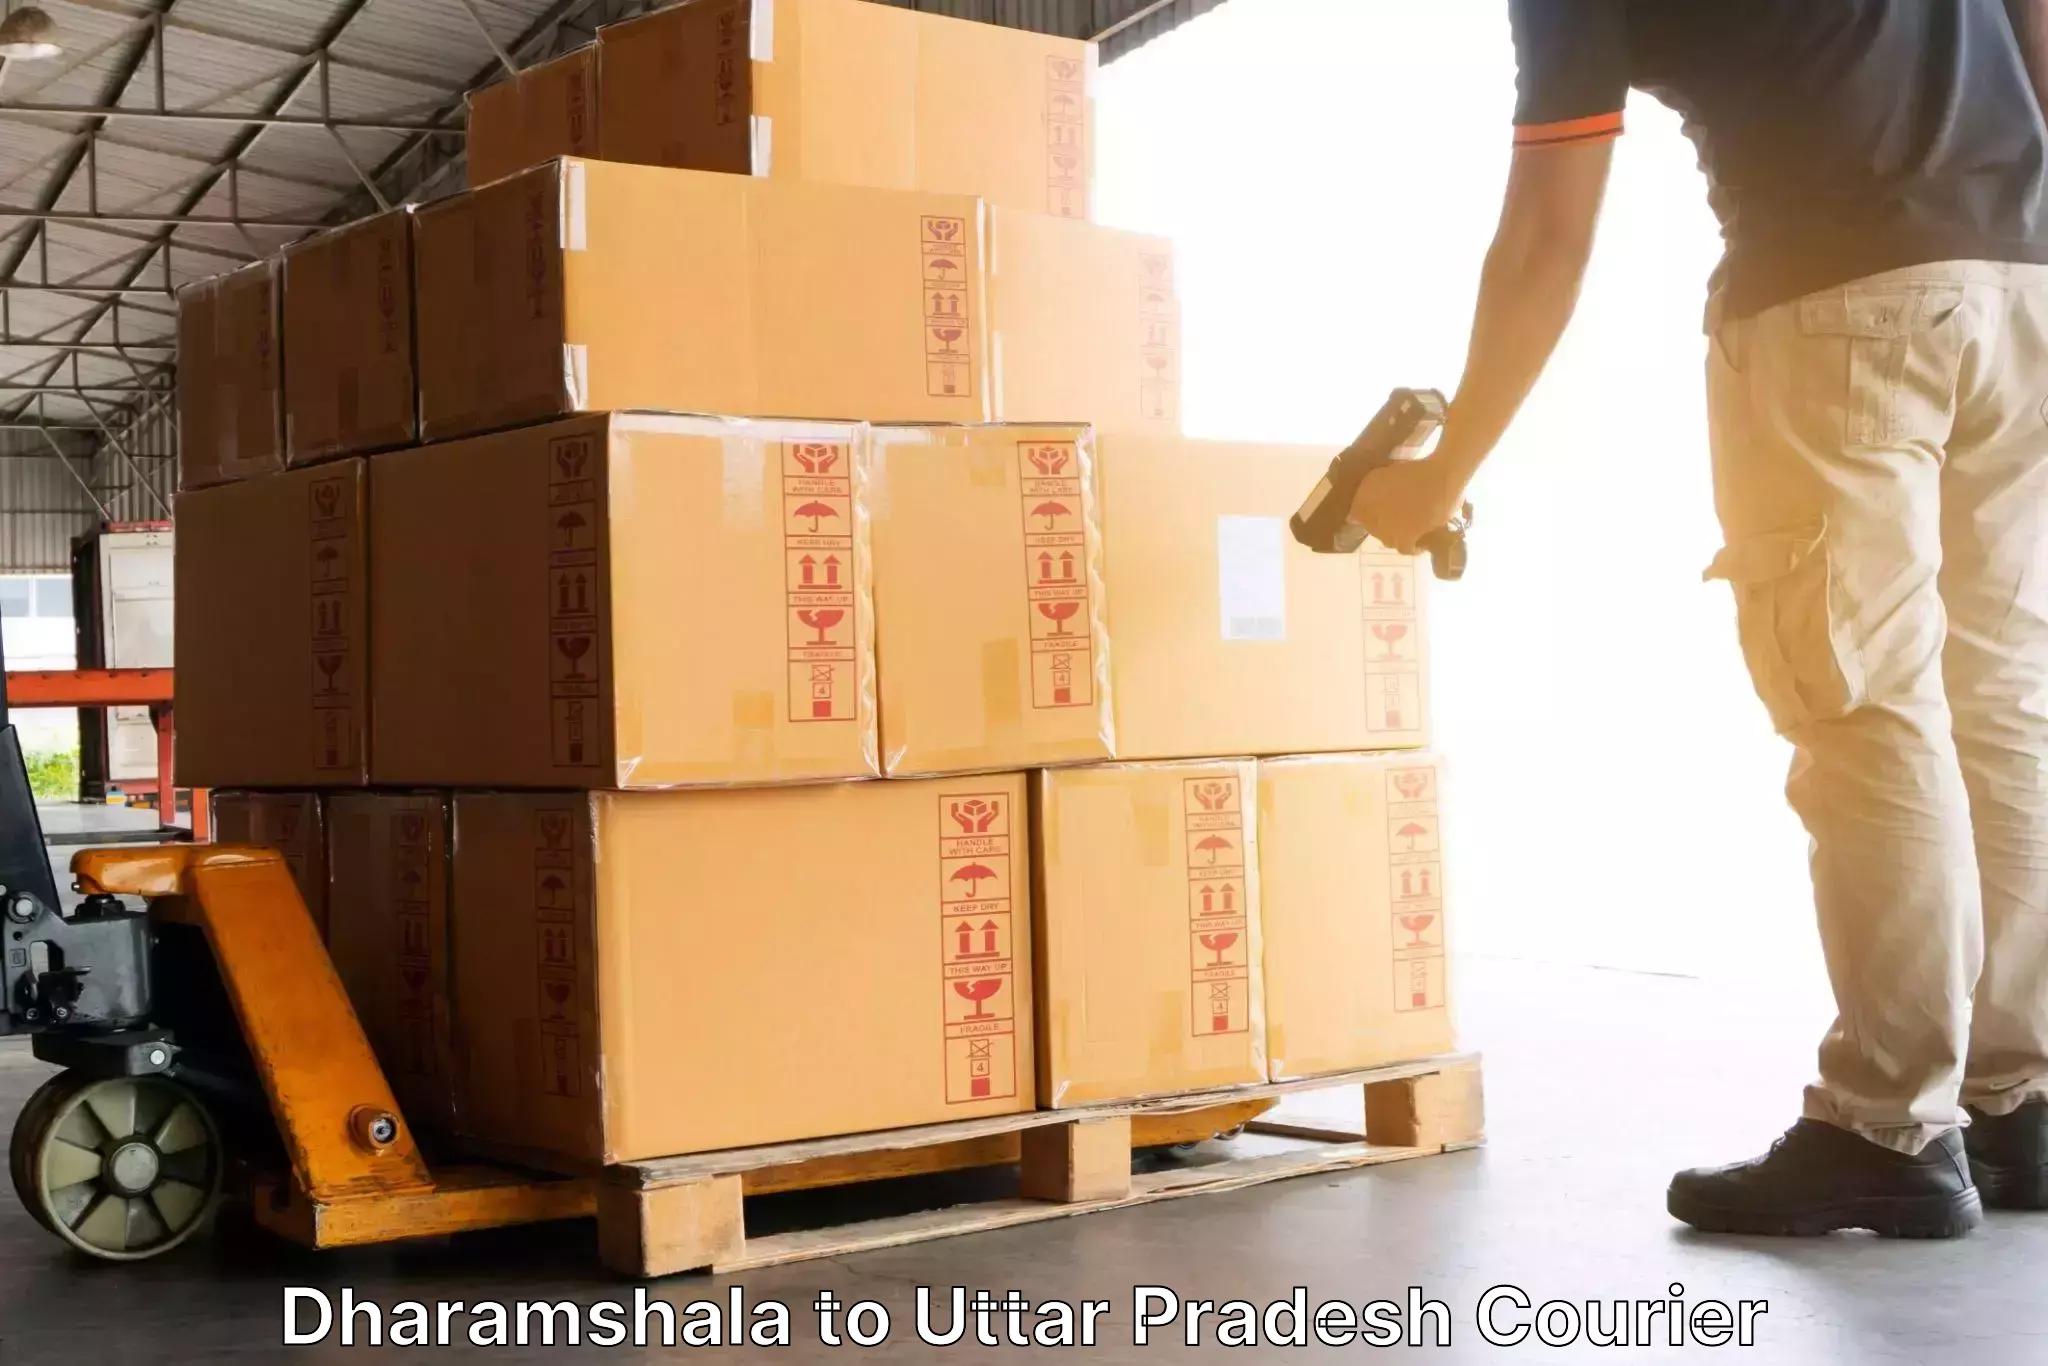 Nationwide shipping capabilities in Dharamshala to Muzaffarnagar